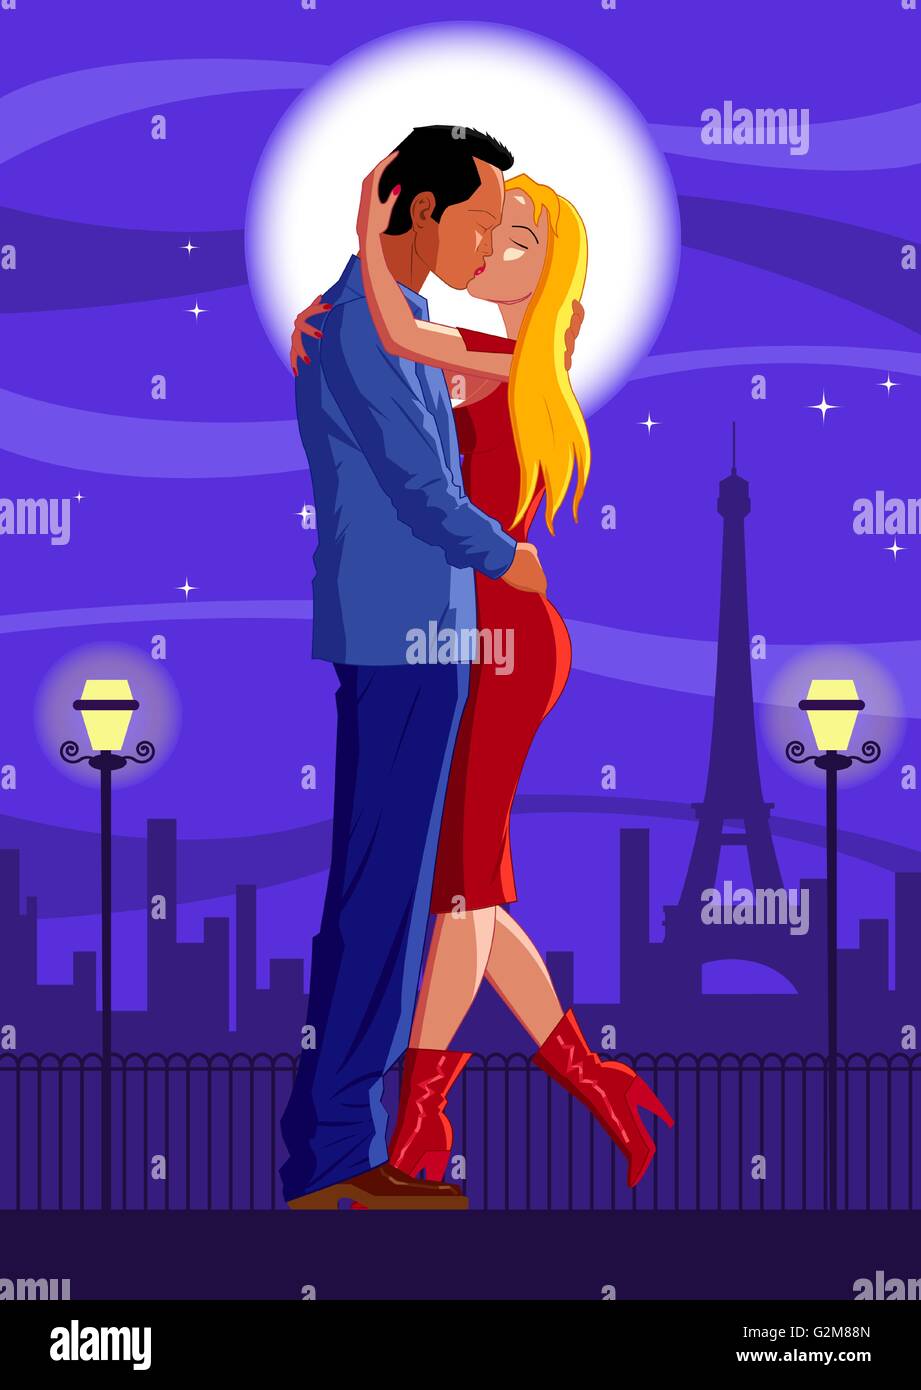 https://c8.alamy.com/comp/G2M88N/couple-kissing-against-full-moon-and-eiffel-tower-paris-france-G2M88N.jpg